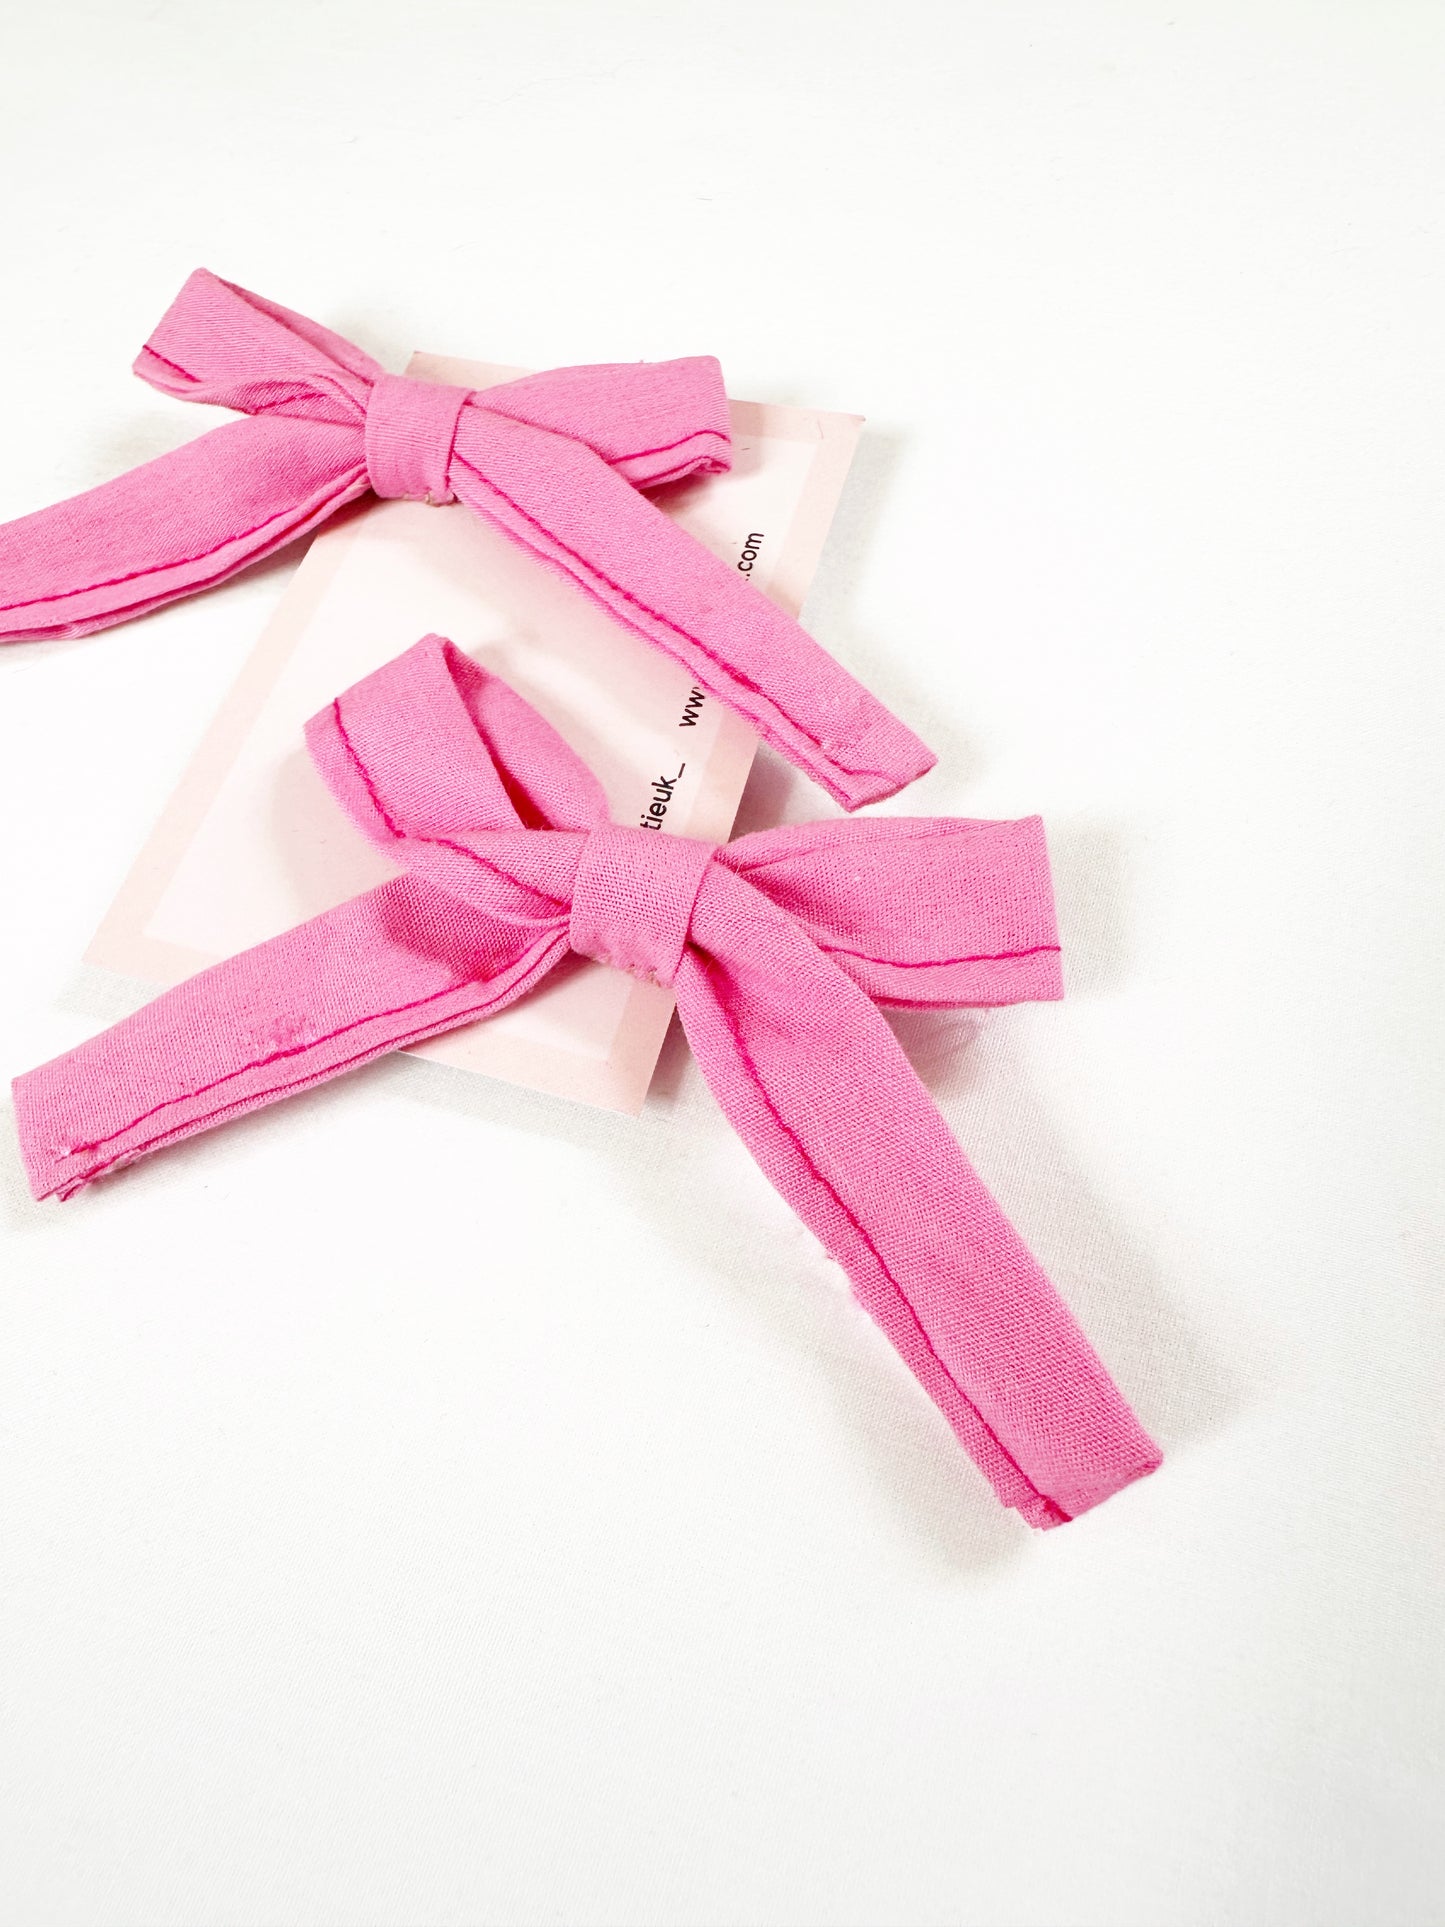 Bonnie mini hair bow set in pop of pink